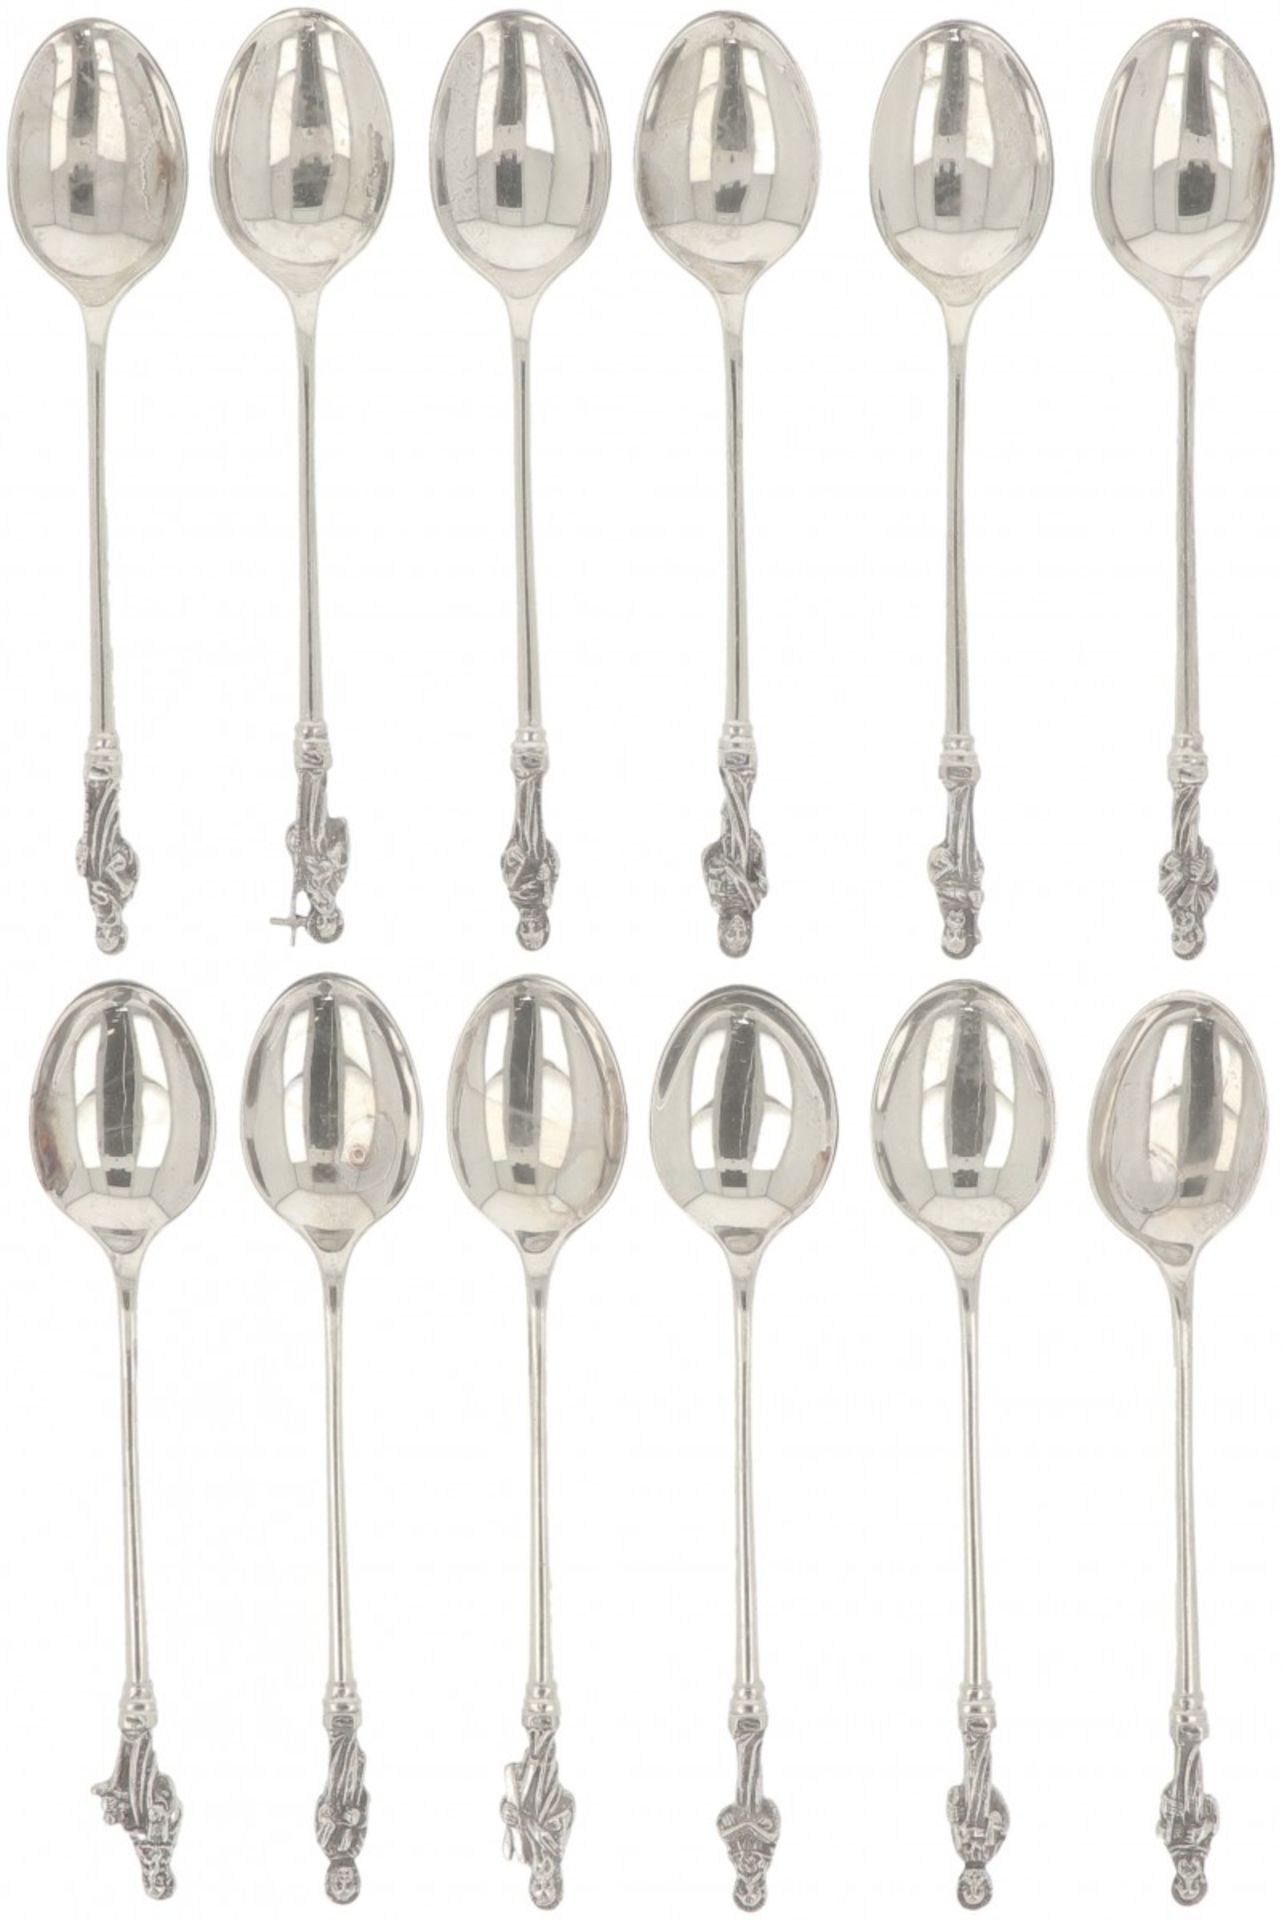 (12) piece set of silver apostle teaspoons.